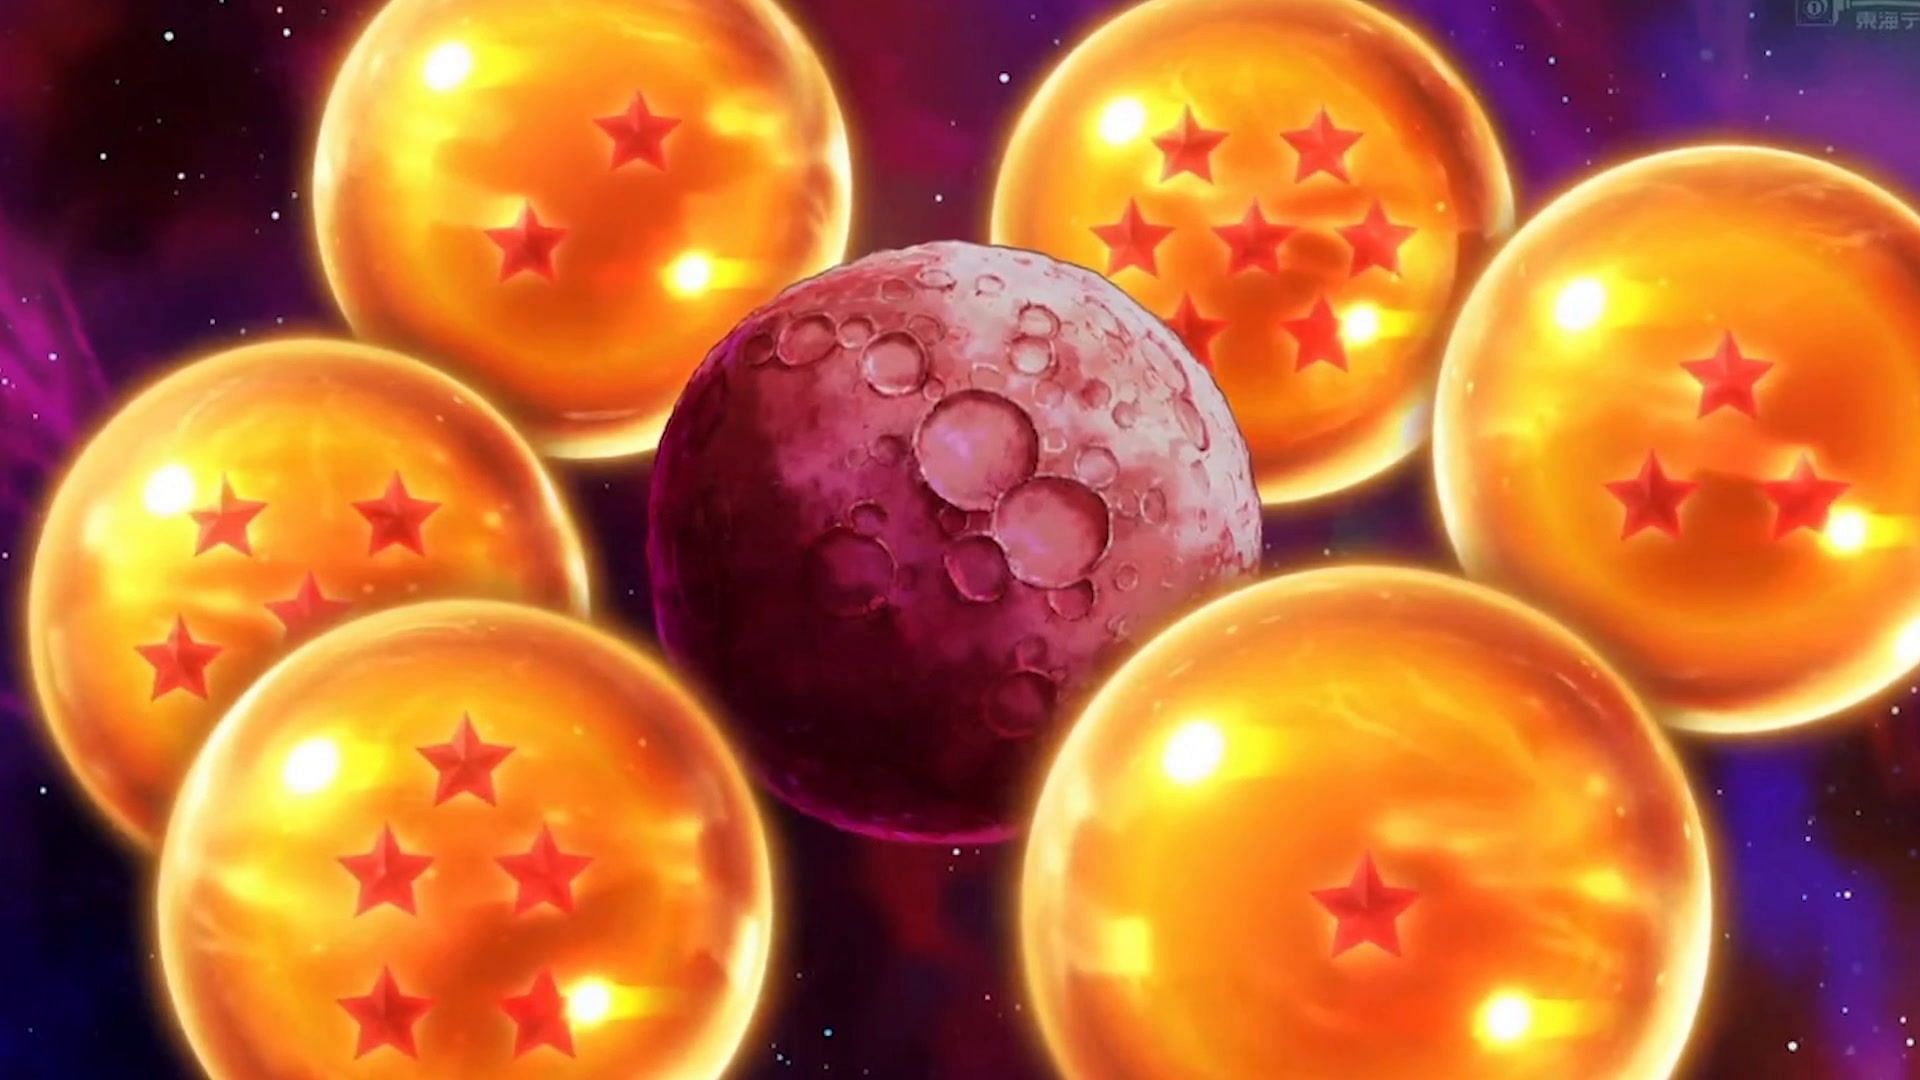 The Super Dragon Balls as seen in the Dragon Ball Super anime (Image Credits: Akira Toriyama, Toyotarou/Shueisha, Viz Media, Dragon Ball Super)